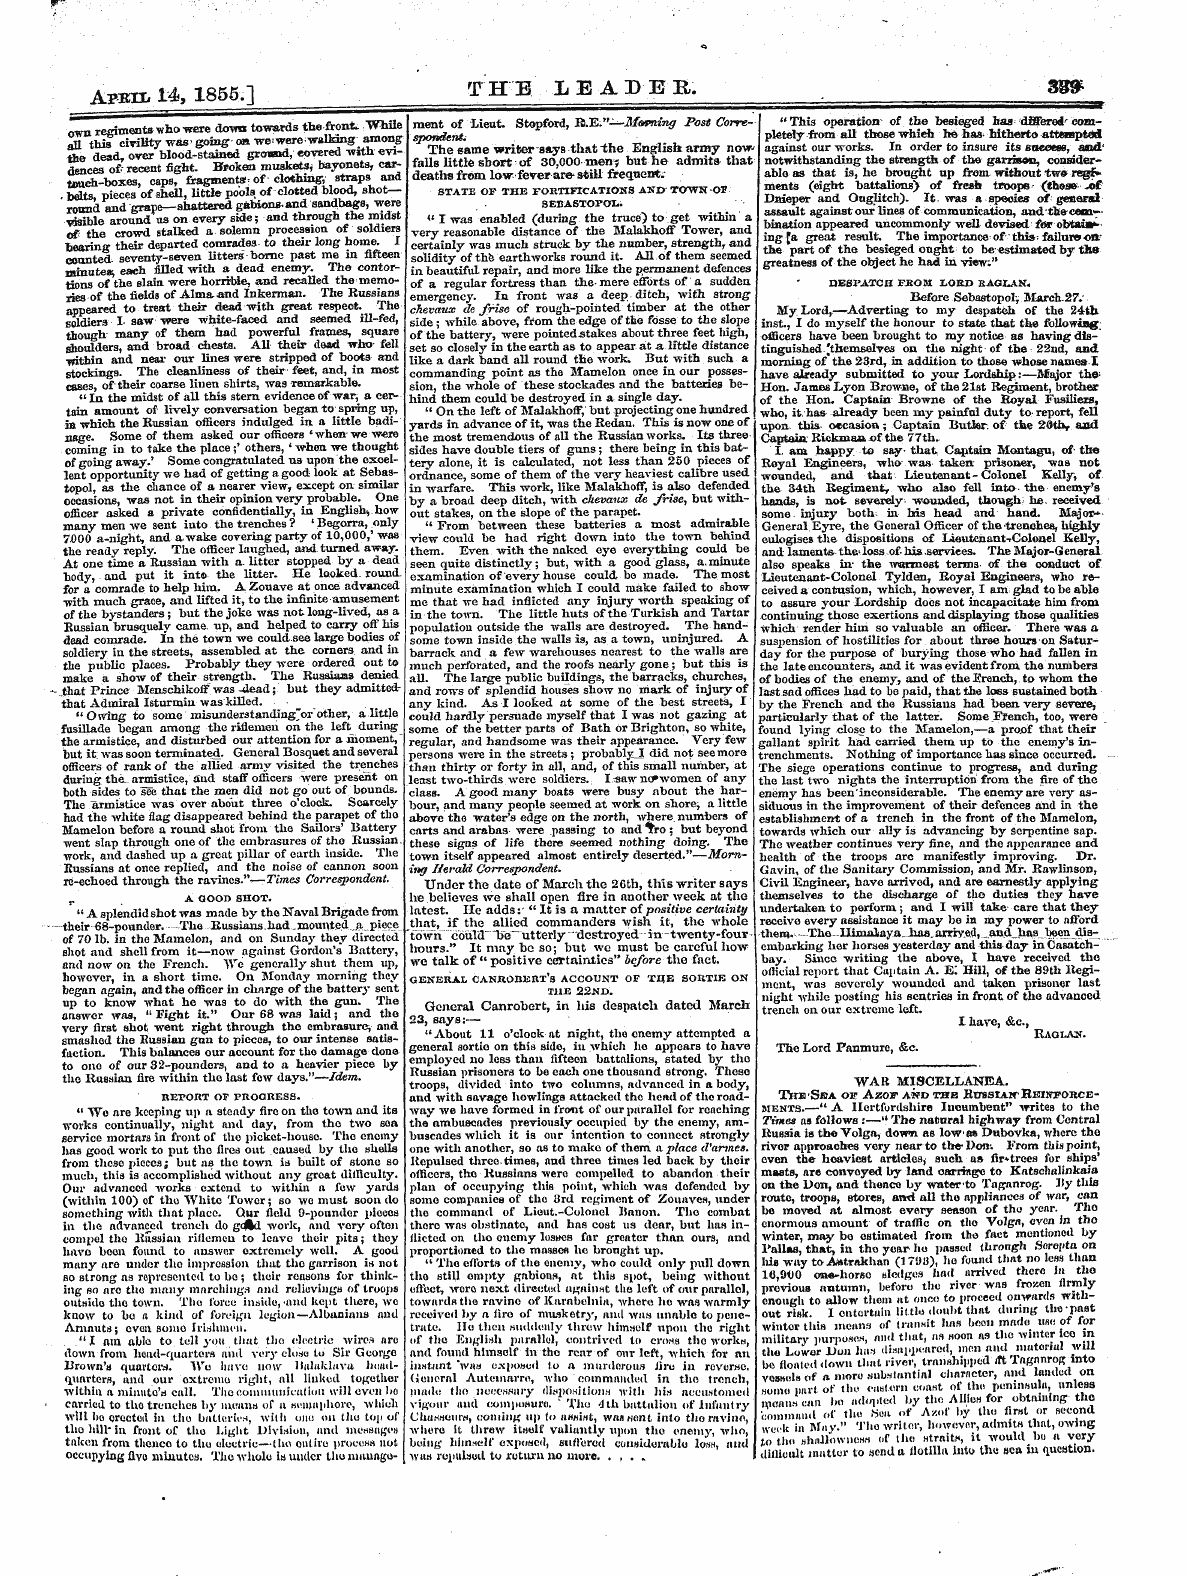 Leader (1850-1860): jS F Y, 2nd edition - War Miscellanea. Tsflb'sfia Of Azov And ...